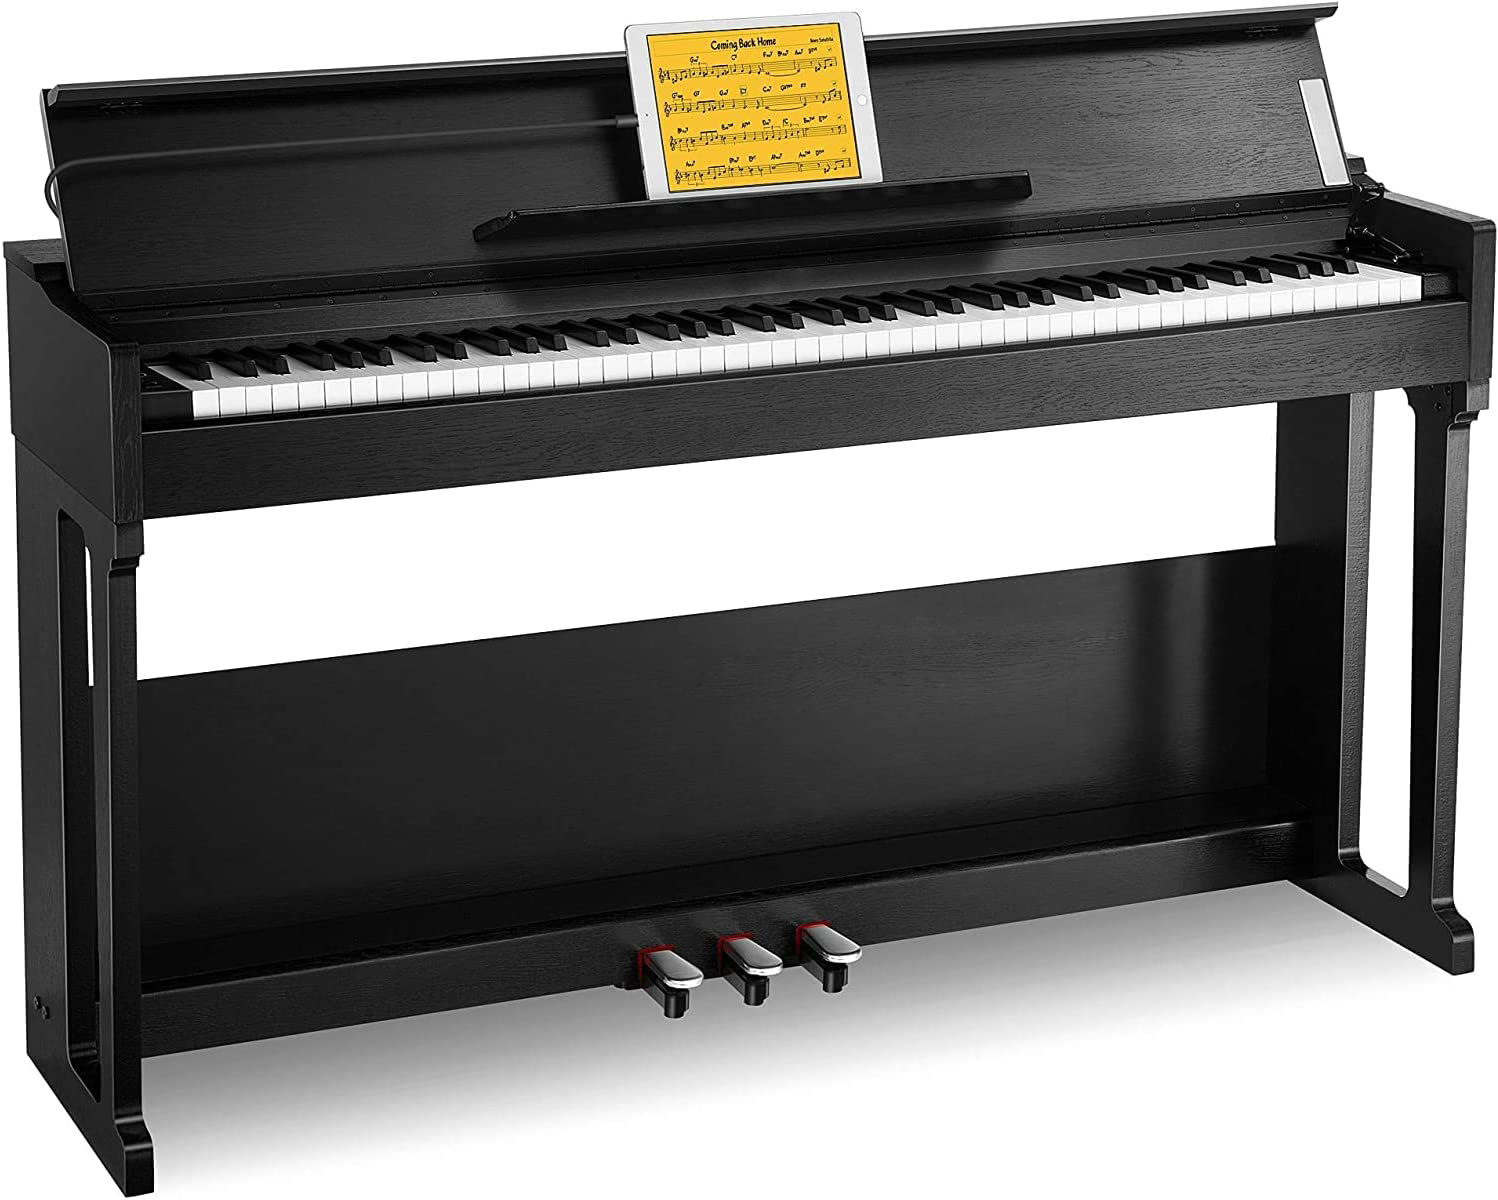 Beisite B90WGBK Dijital Piyano